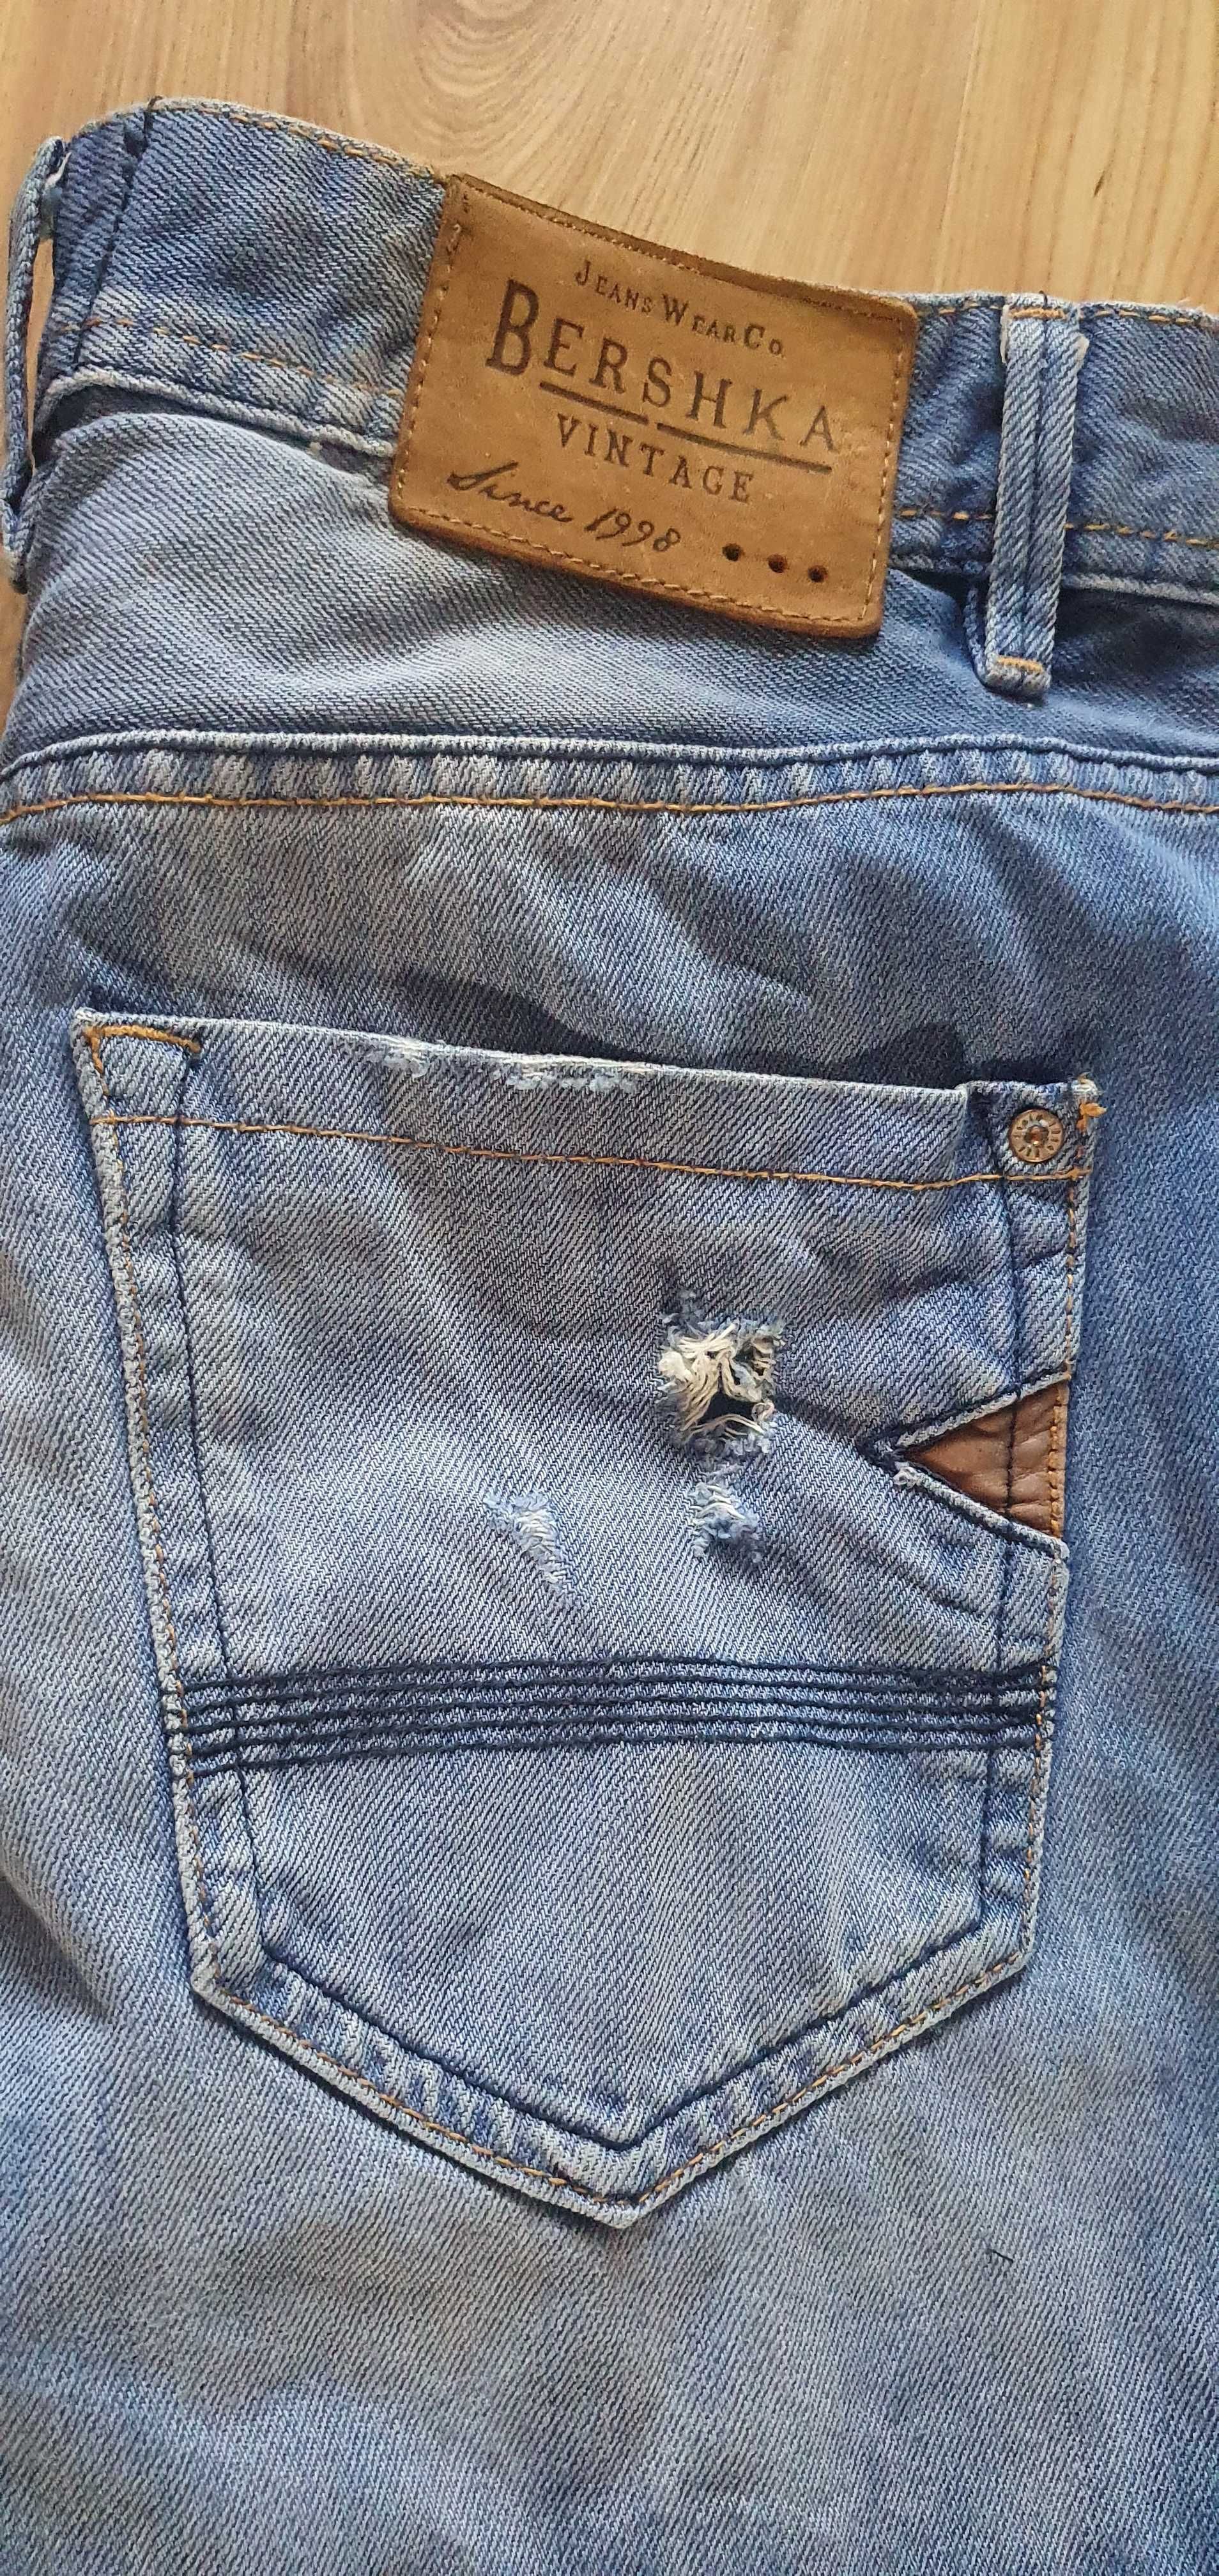 Bershka Vintage jeansy z dziurami zapinane na guziki s